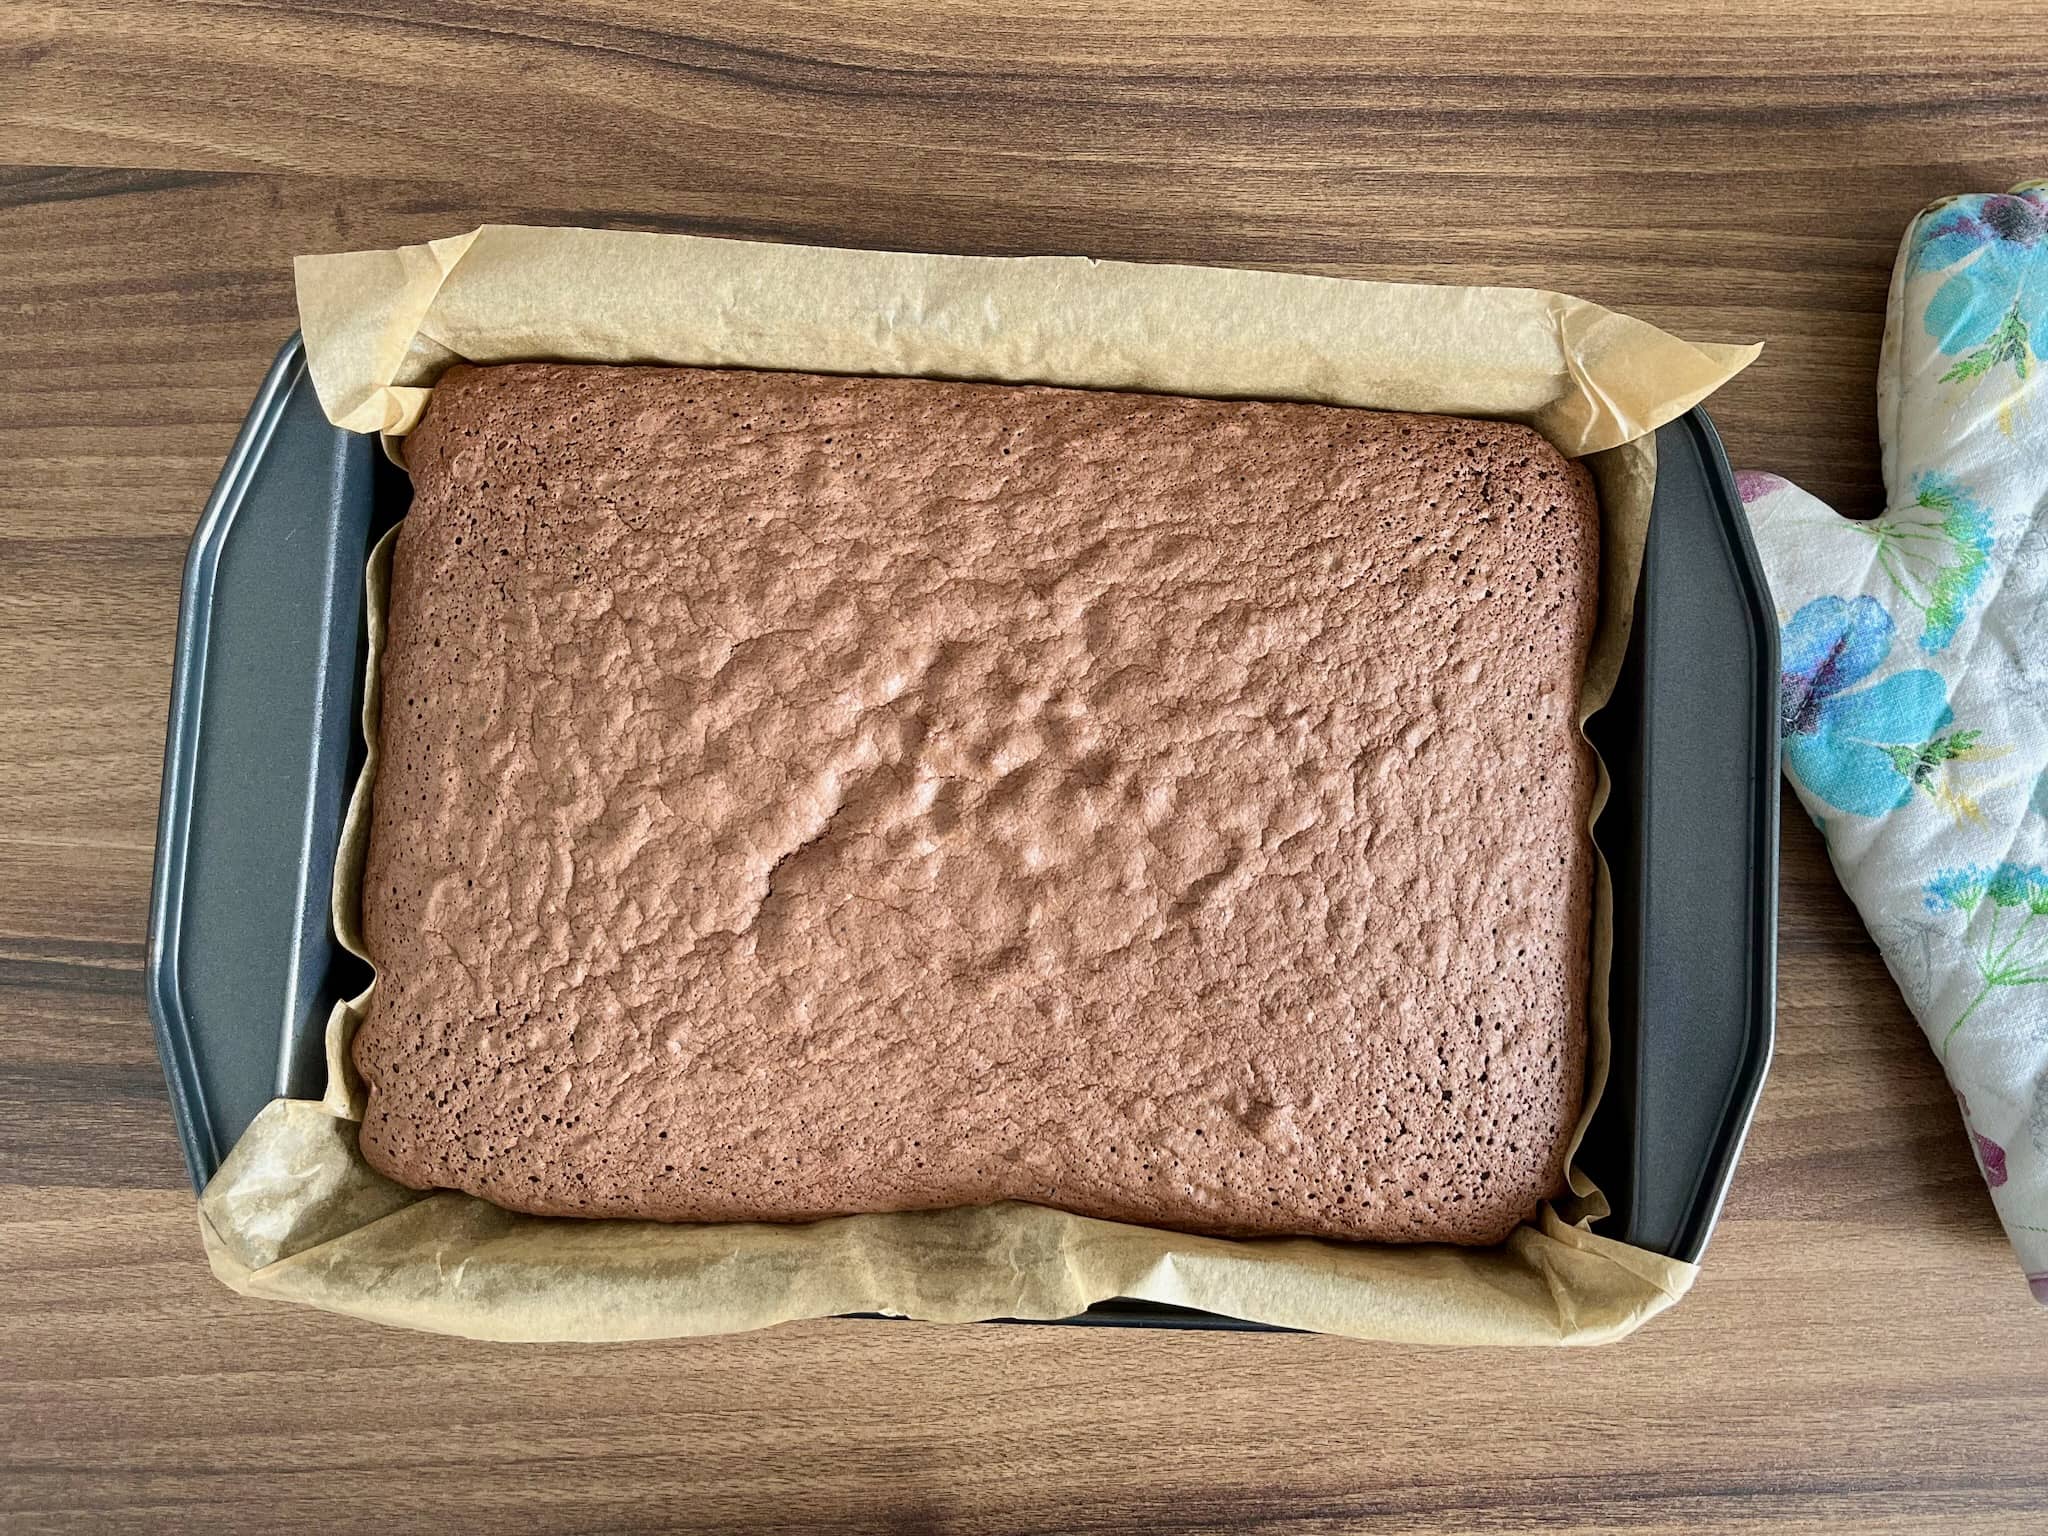 Baked sponge cake straight from the oven